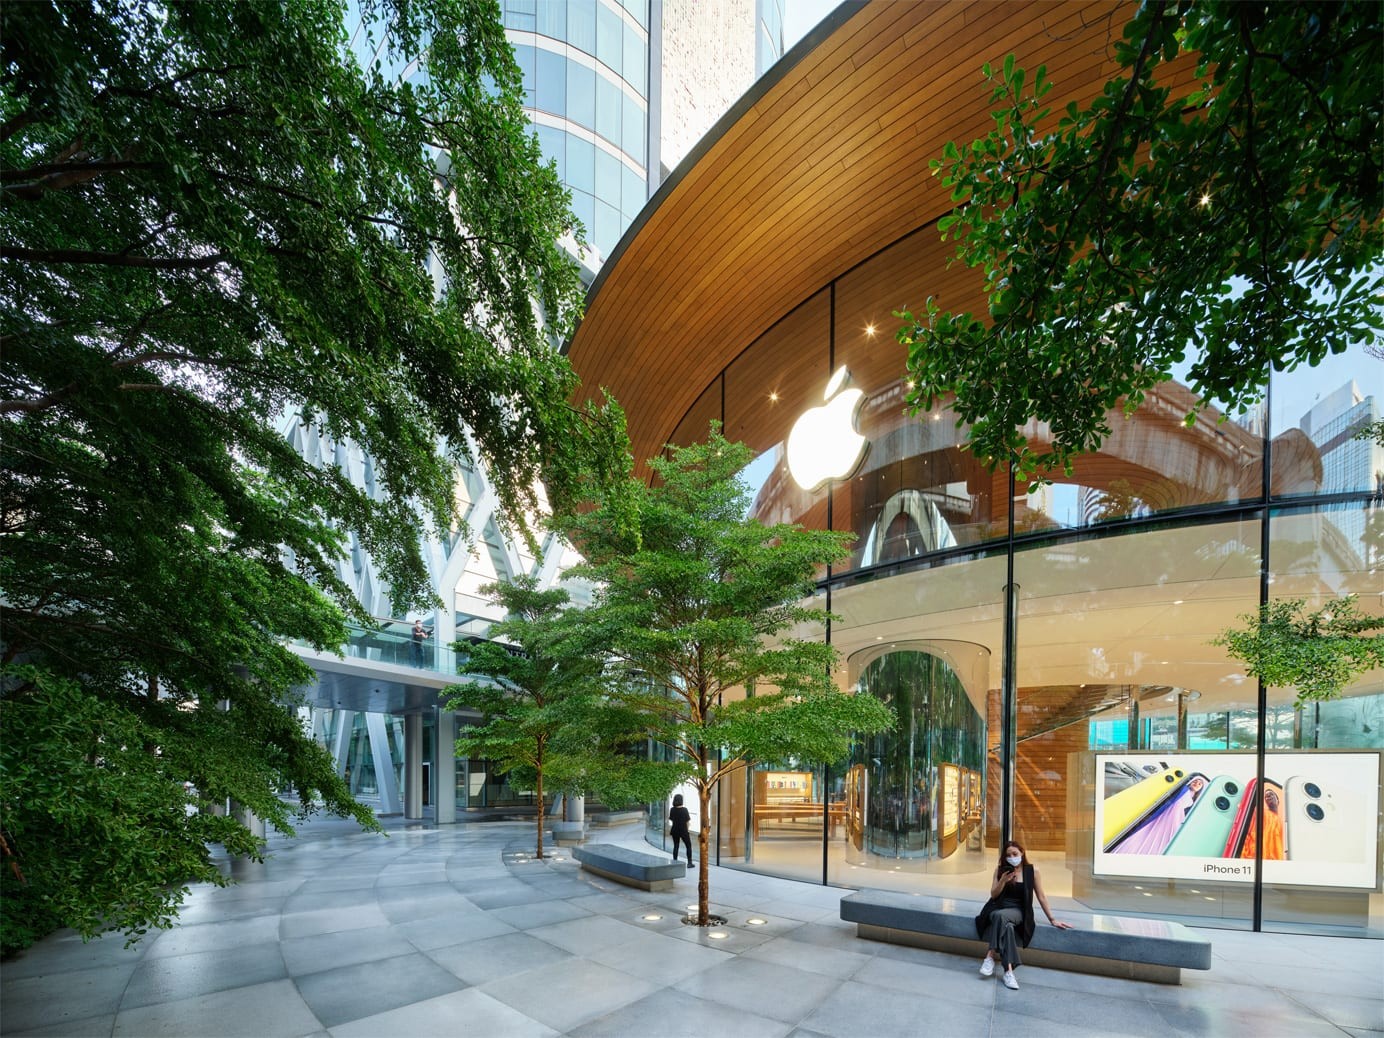 Loja da Apple na Tailândia tem estrutura de vidro e teto circular de madeira (Foto: Apple)